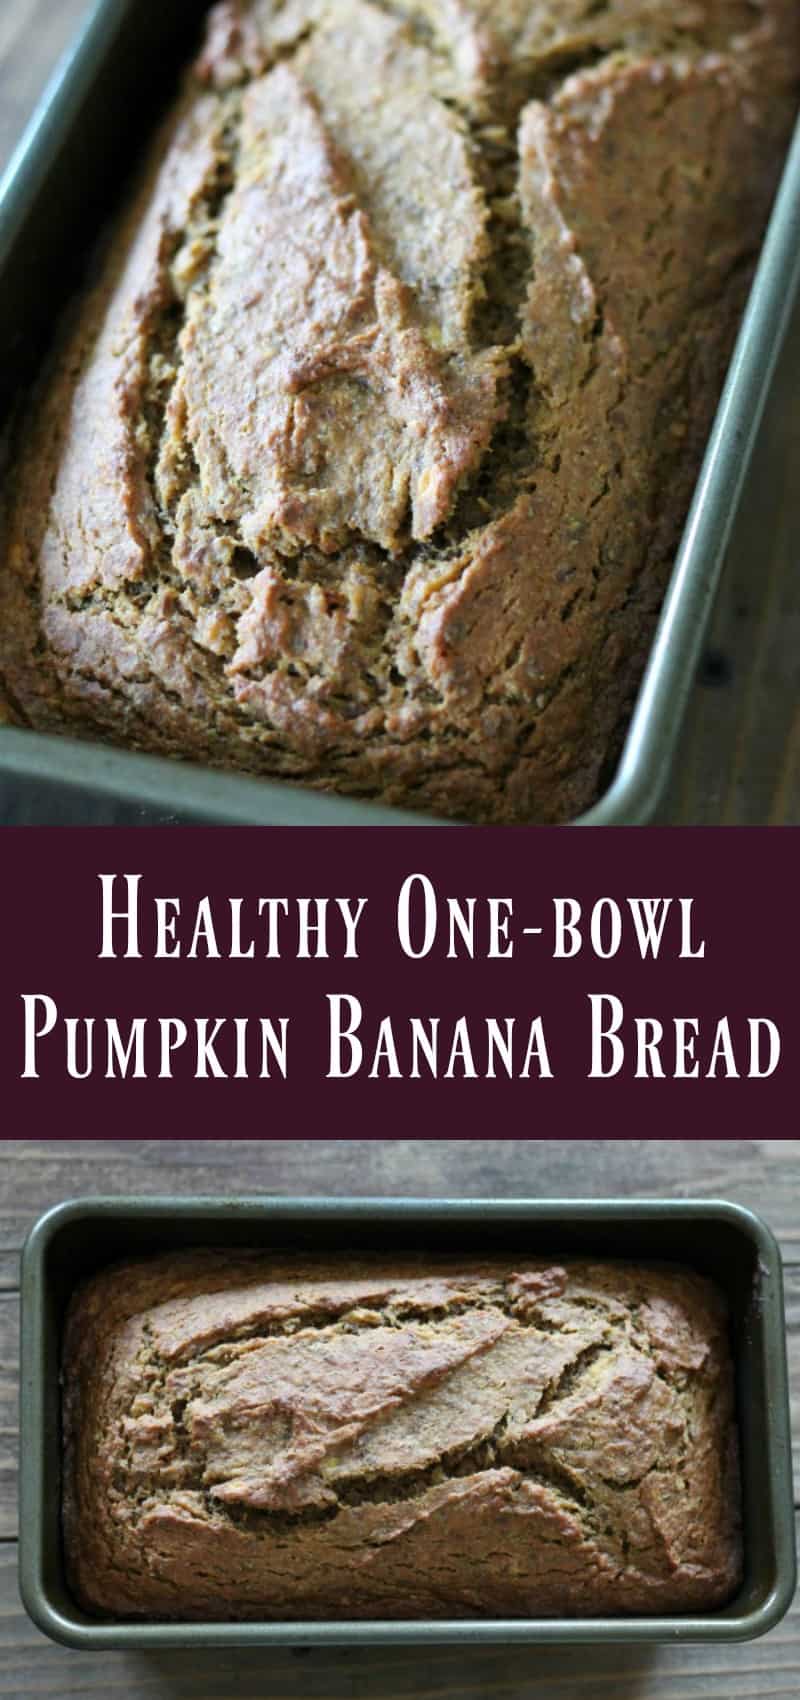 Healthy One-bowl Pumpkin Banana Bread